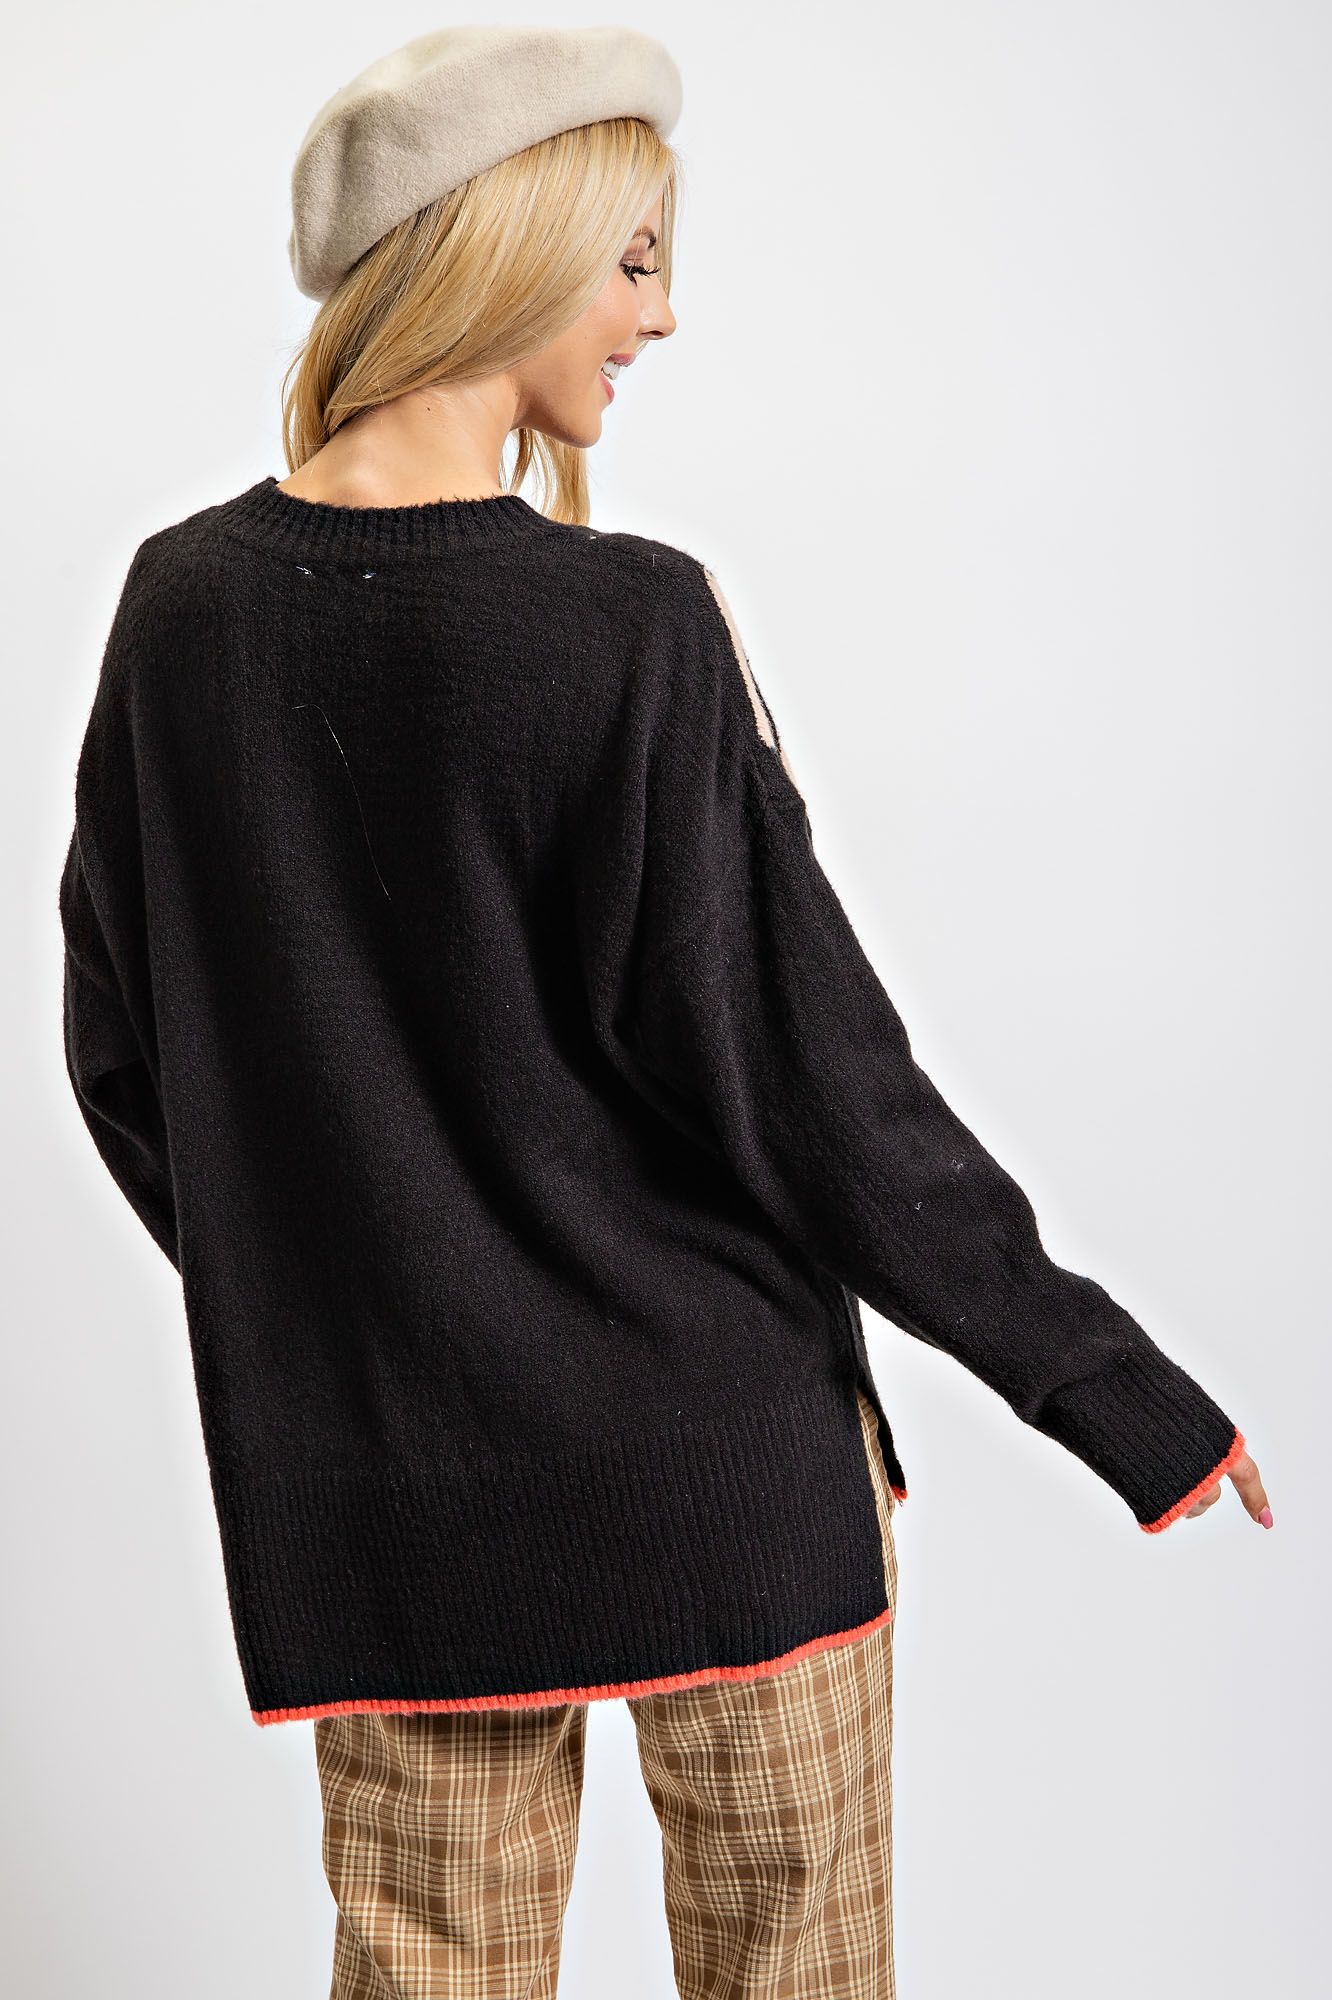 Black & Pink Leopard Print Sweater